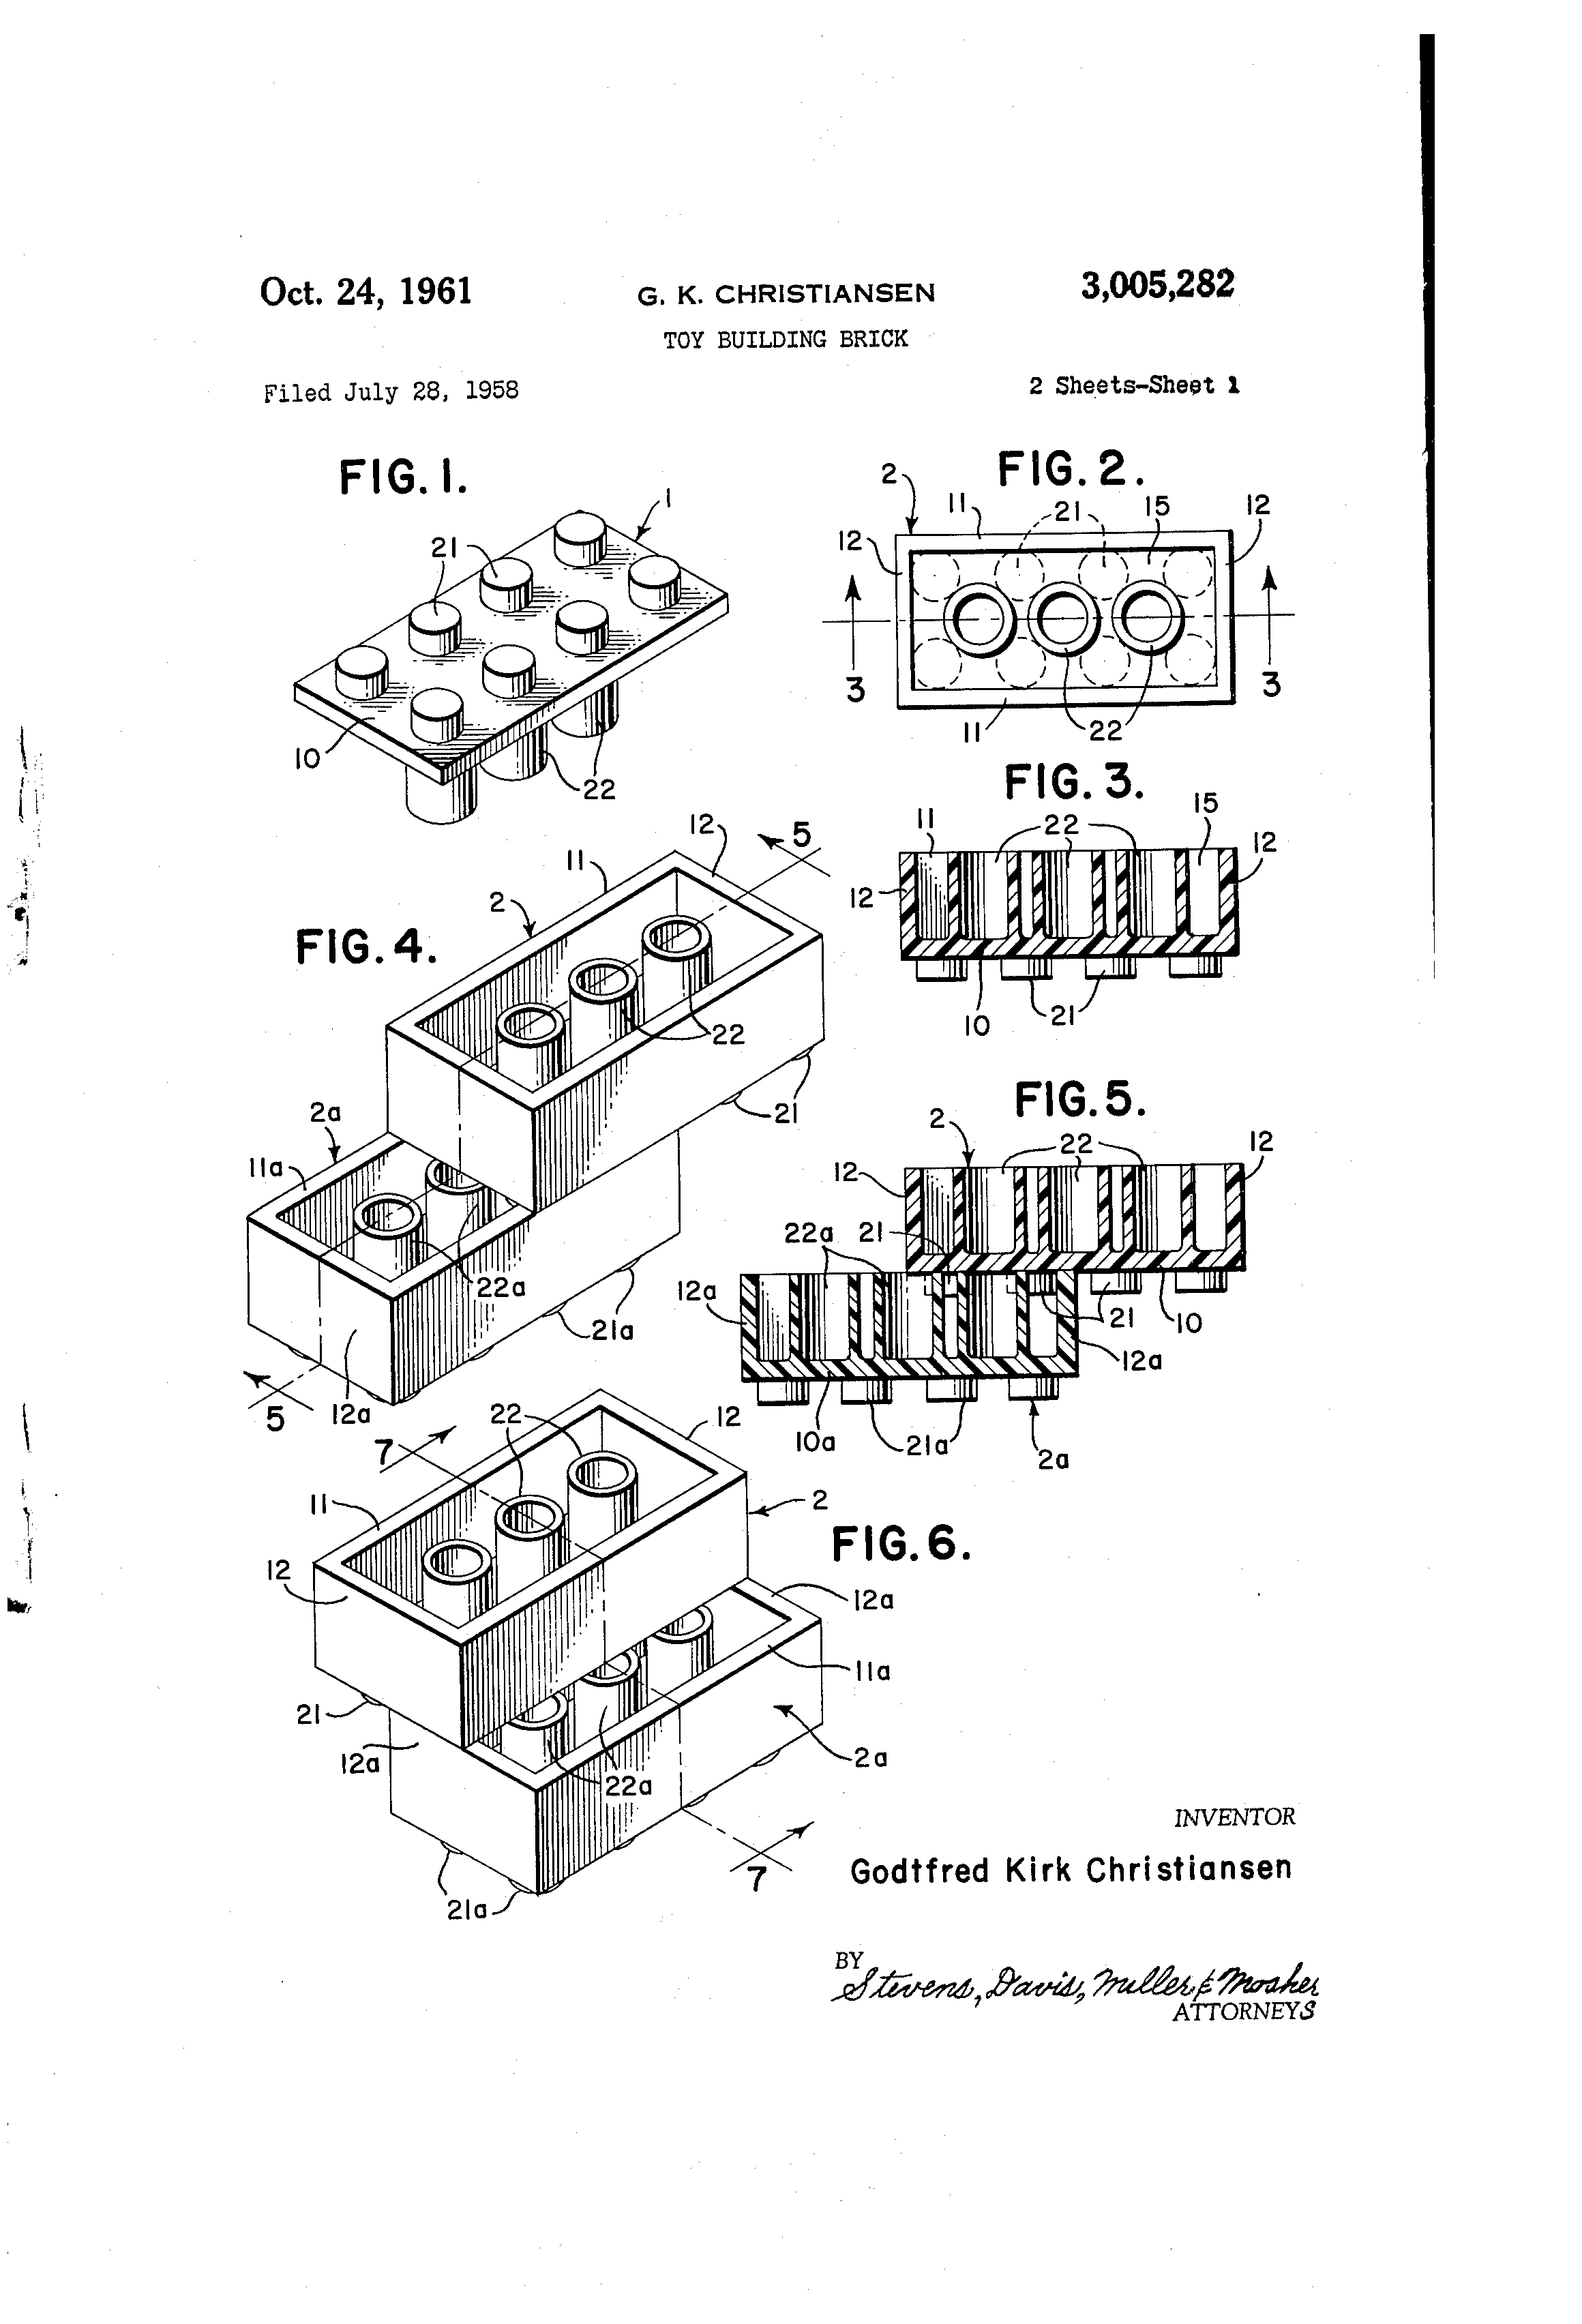 LEGO Toy Building Brick Patent - U.S. Patent No. 3,005,282